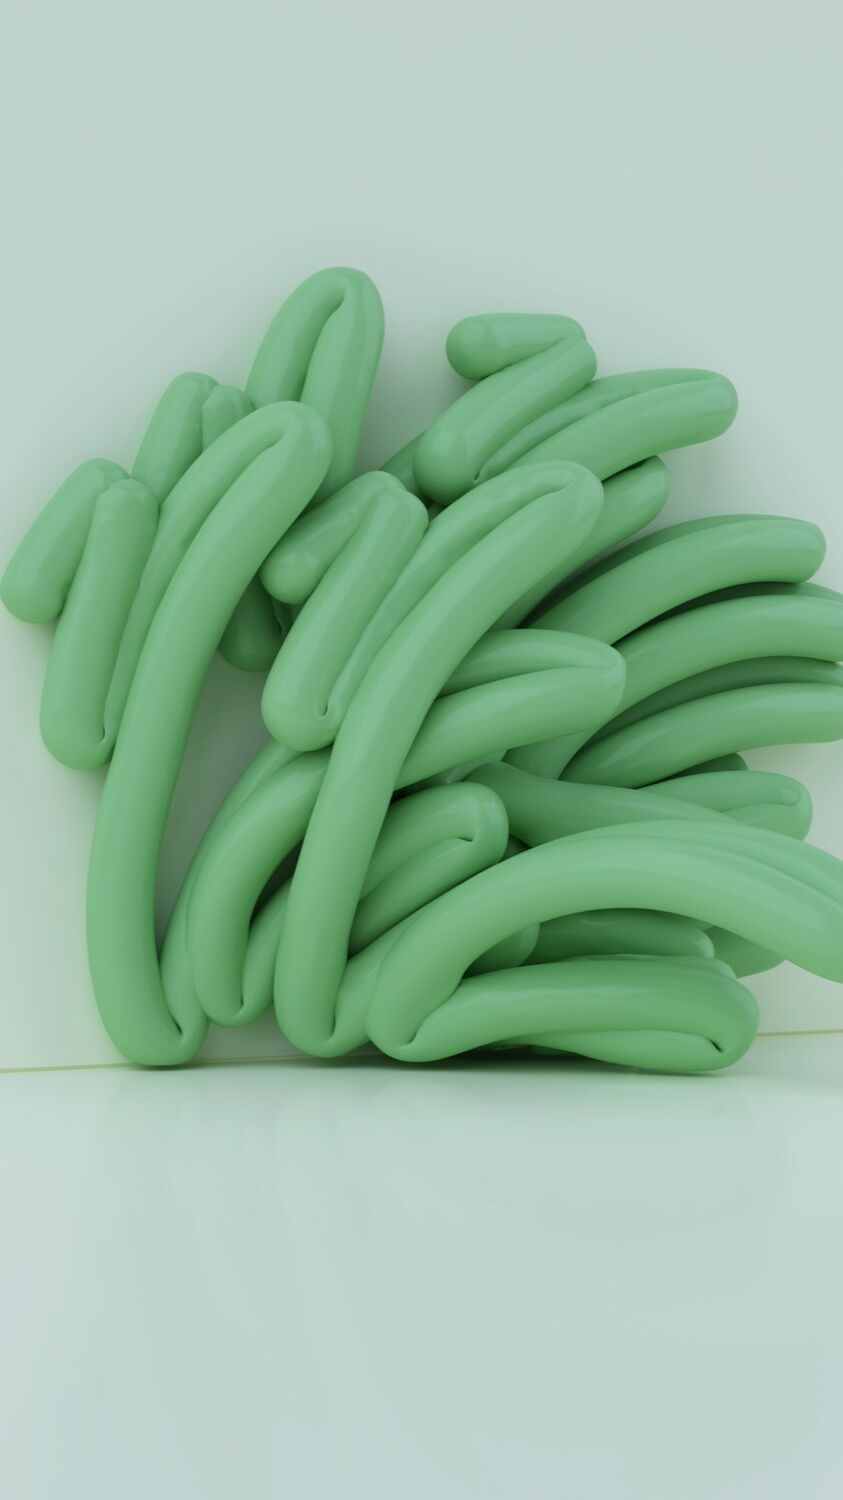 Manuel Rossner, Bouncy Sculpture V, 2021. Courtesy of the artist and Verisart.